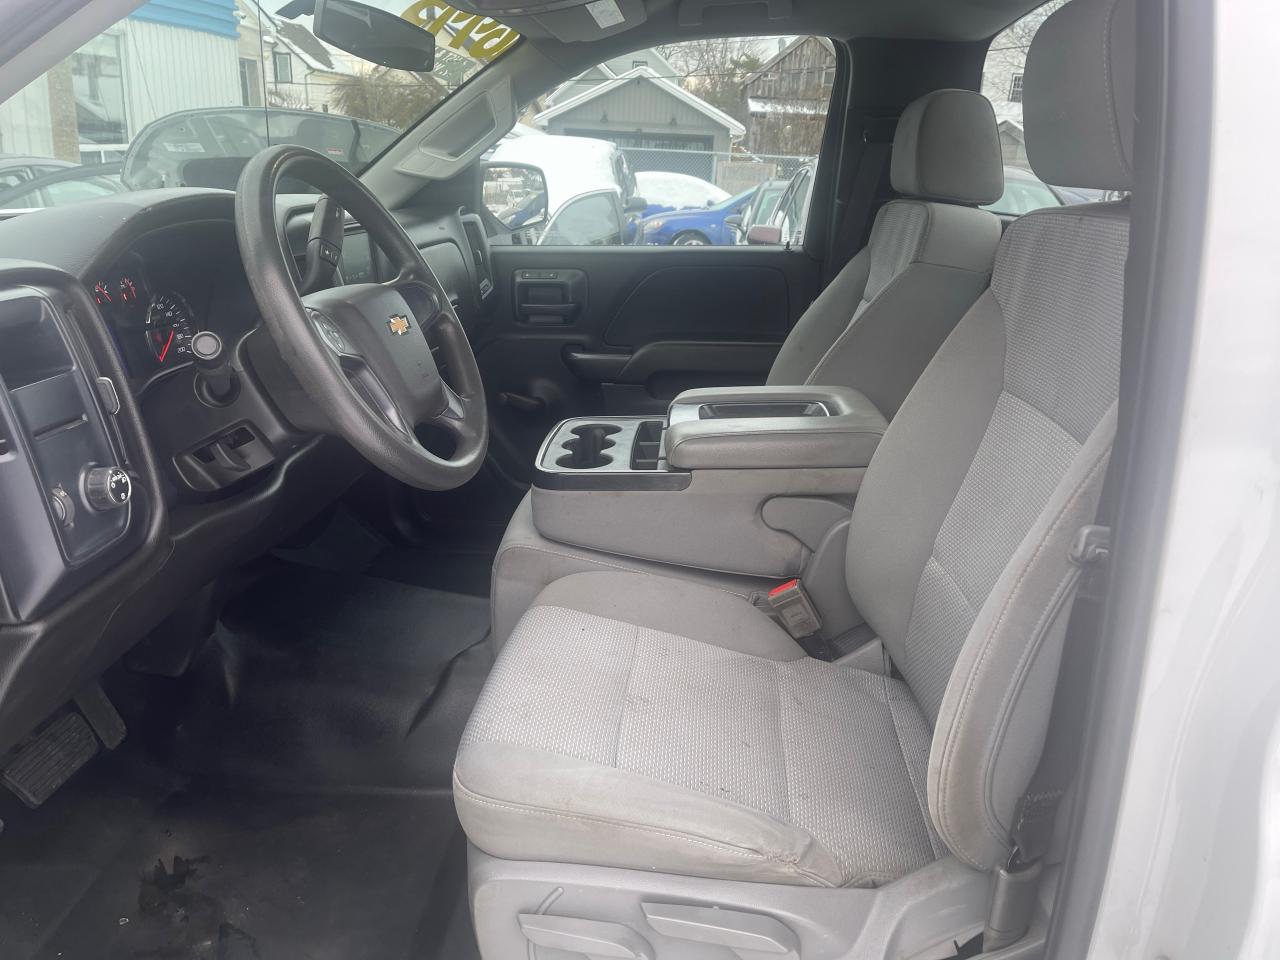 2018 Chevrolet Silverado 1500 LS, Reg. Cab. 8 Ft. Box, V6. - Photo #18